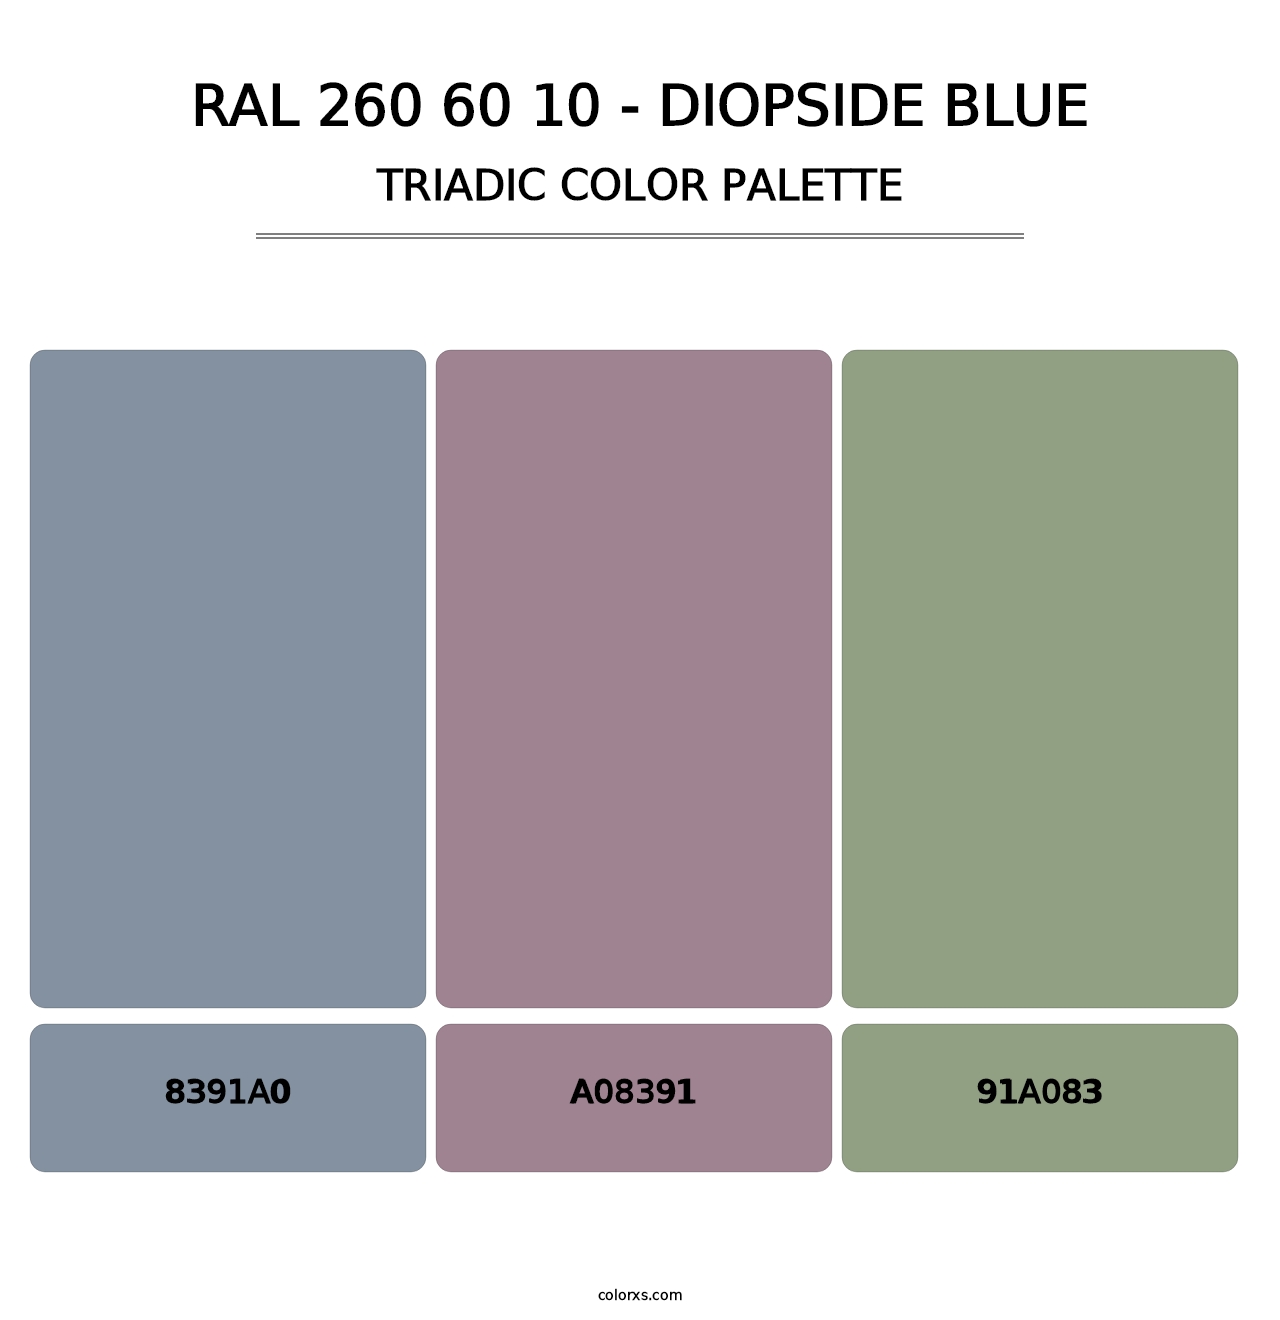 RAL 260 60 10 - Diopside Blue - Triadic Color Palette